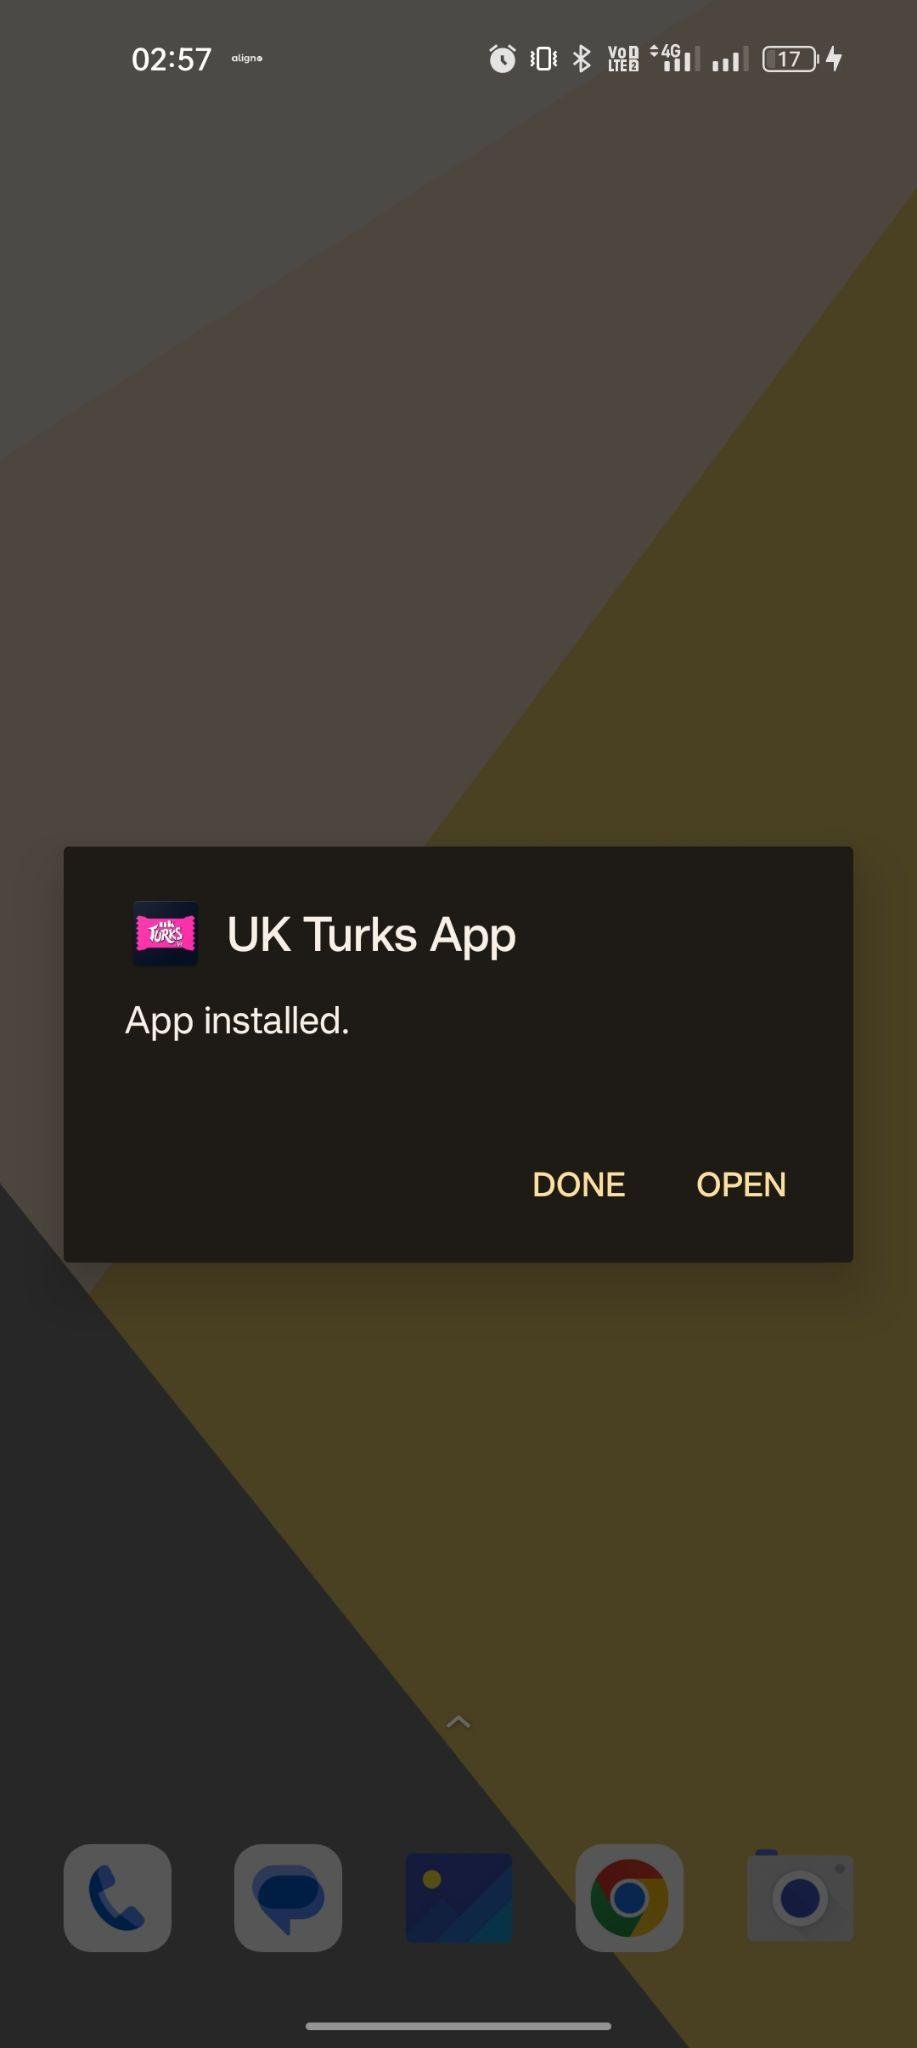 UK Turks apk installed